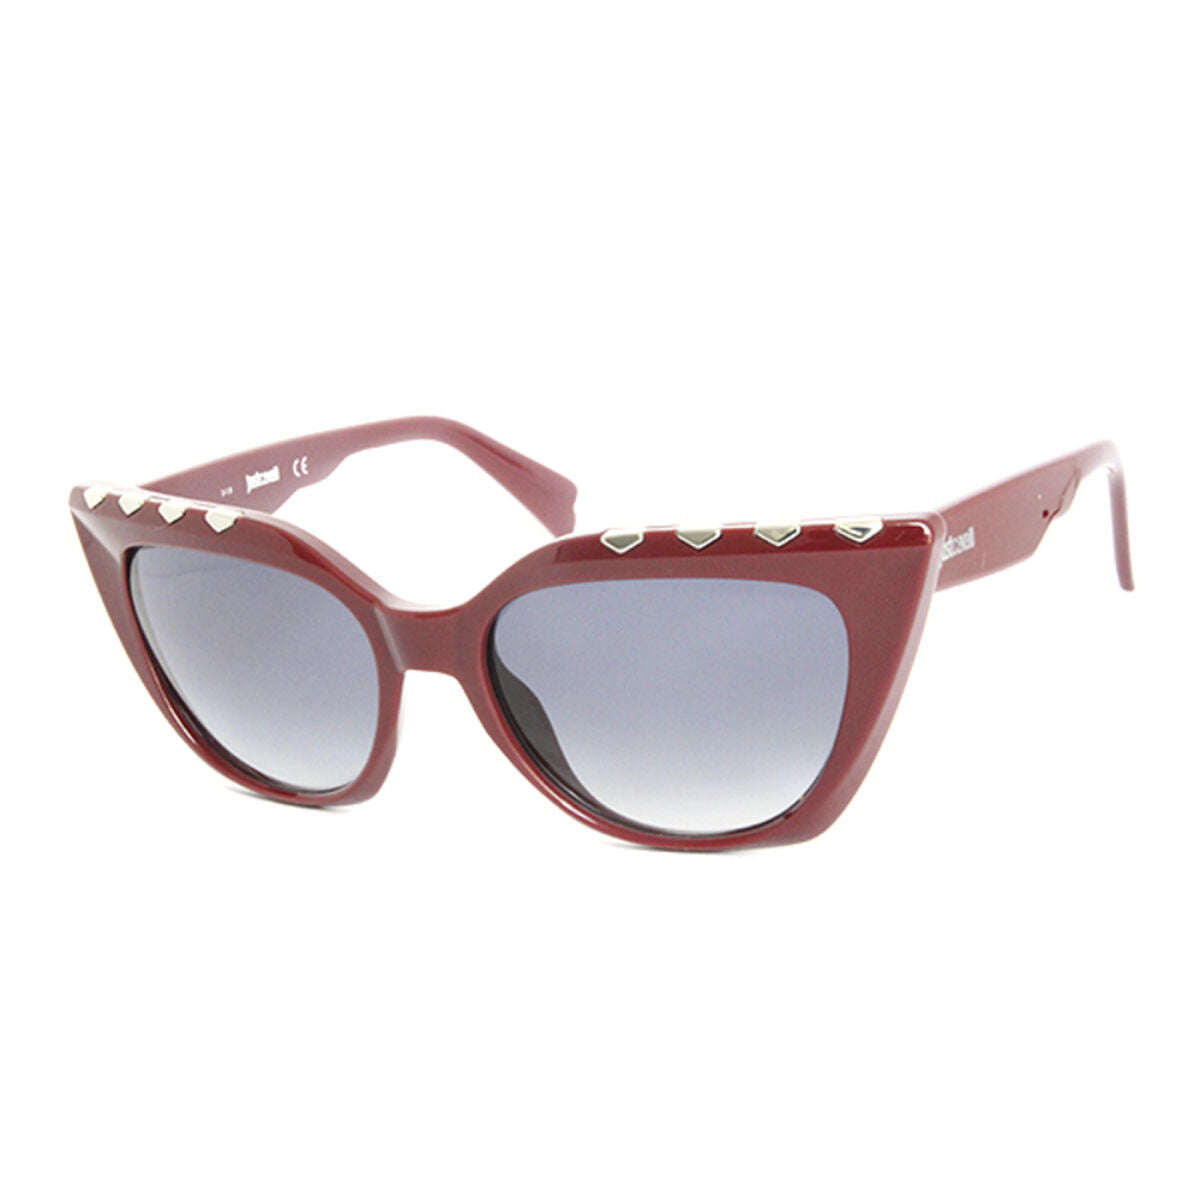 Ladies' Sunglasses Just Cavalli JC821SE